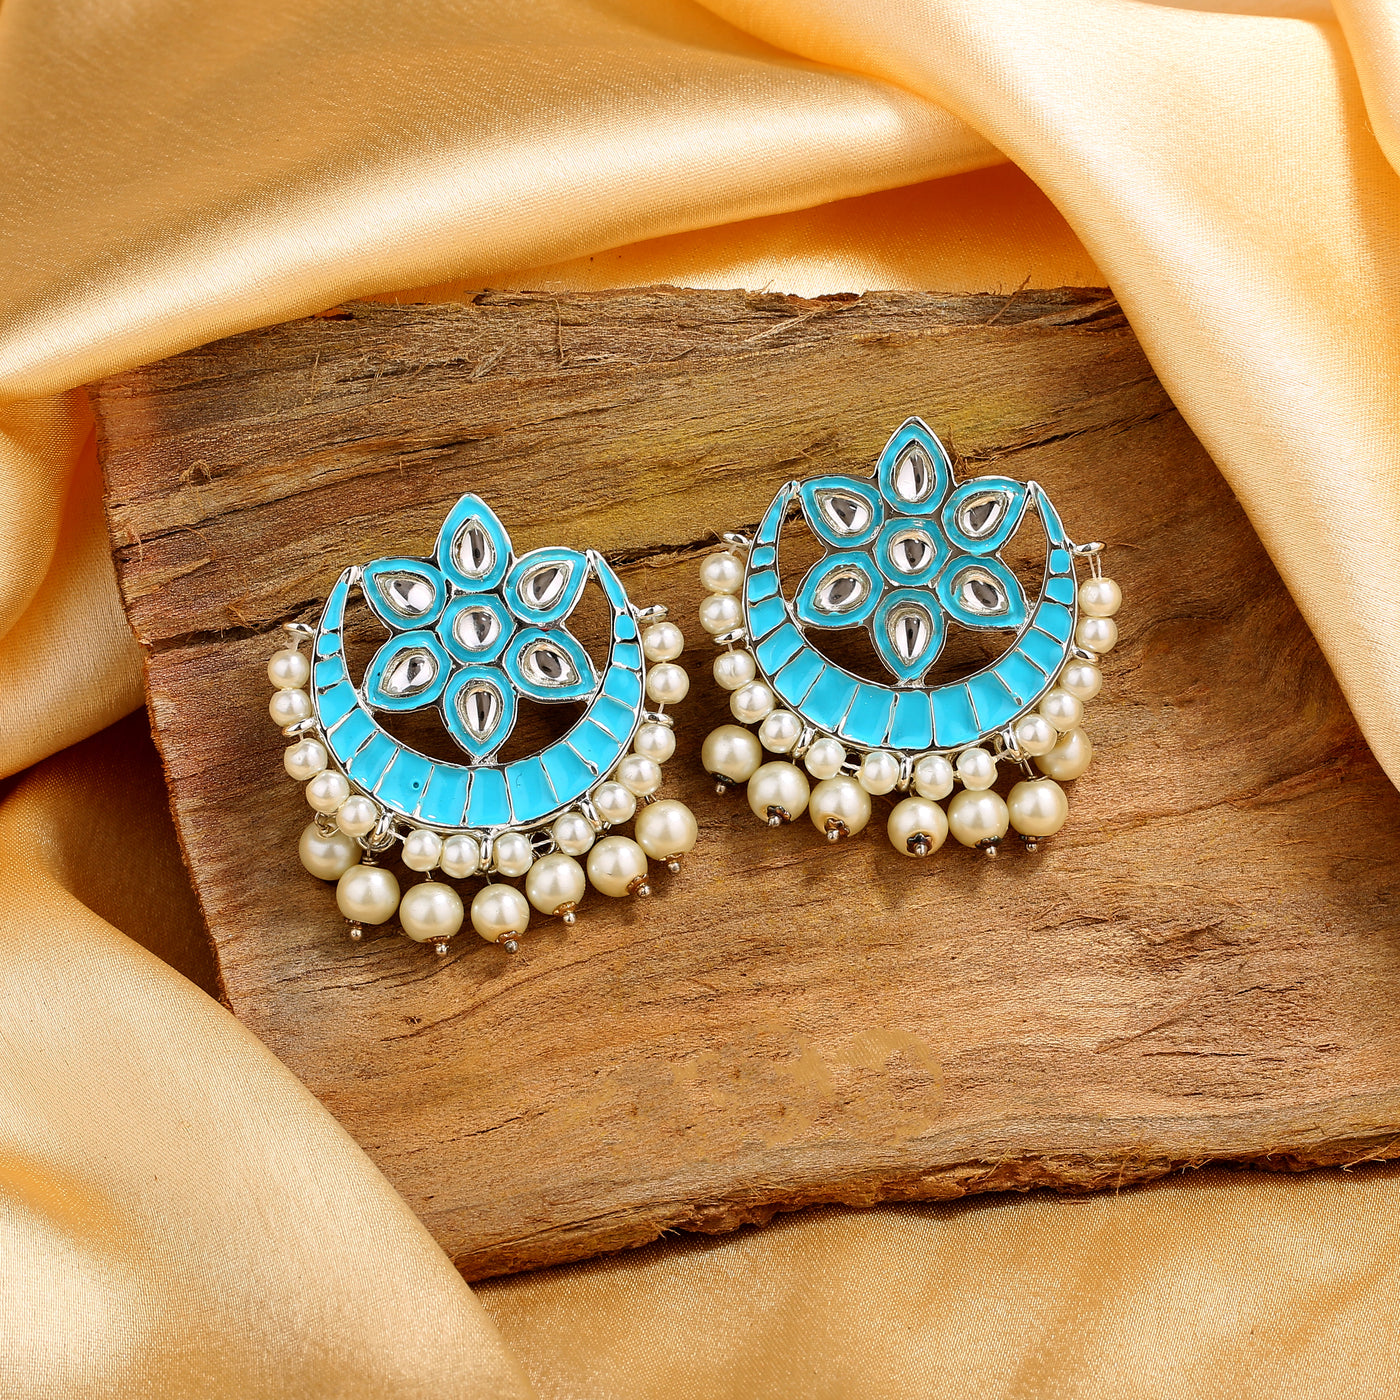 Estele Rhodium Plated Attractive Meenakari Kundan Earrings with Pearl & Blue Enamel for Women